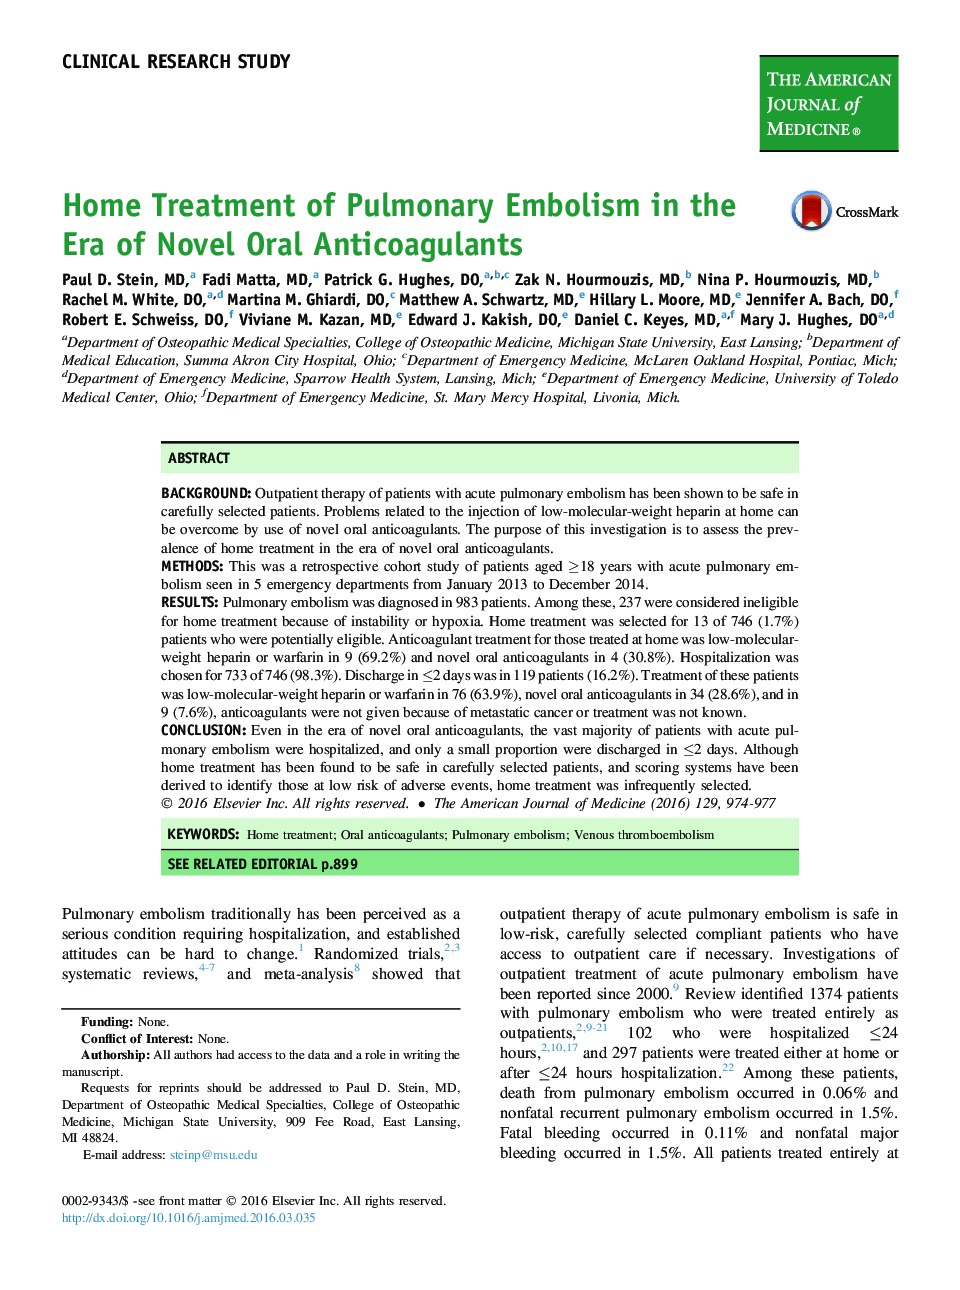 Home Treatment of Pulmonary Embolism in the Era of Novel Oral Anticoagulants 